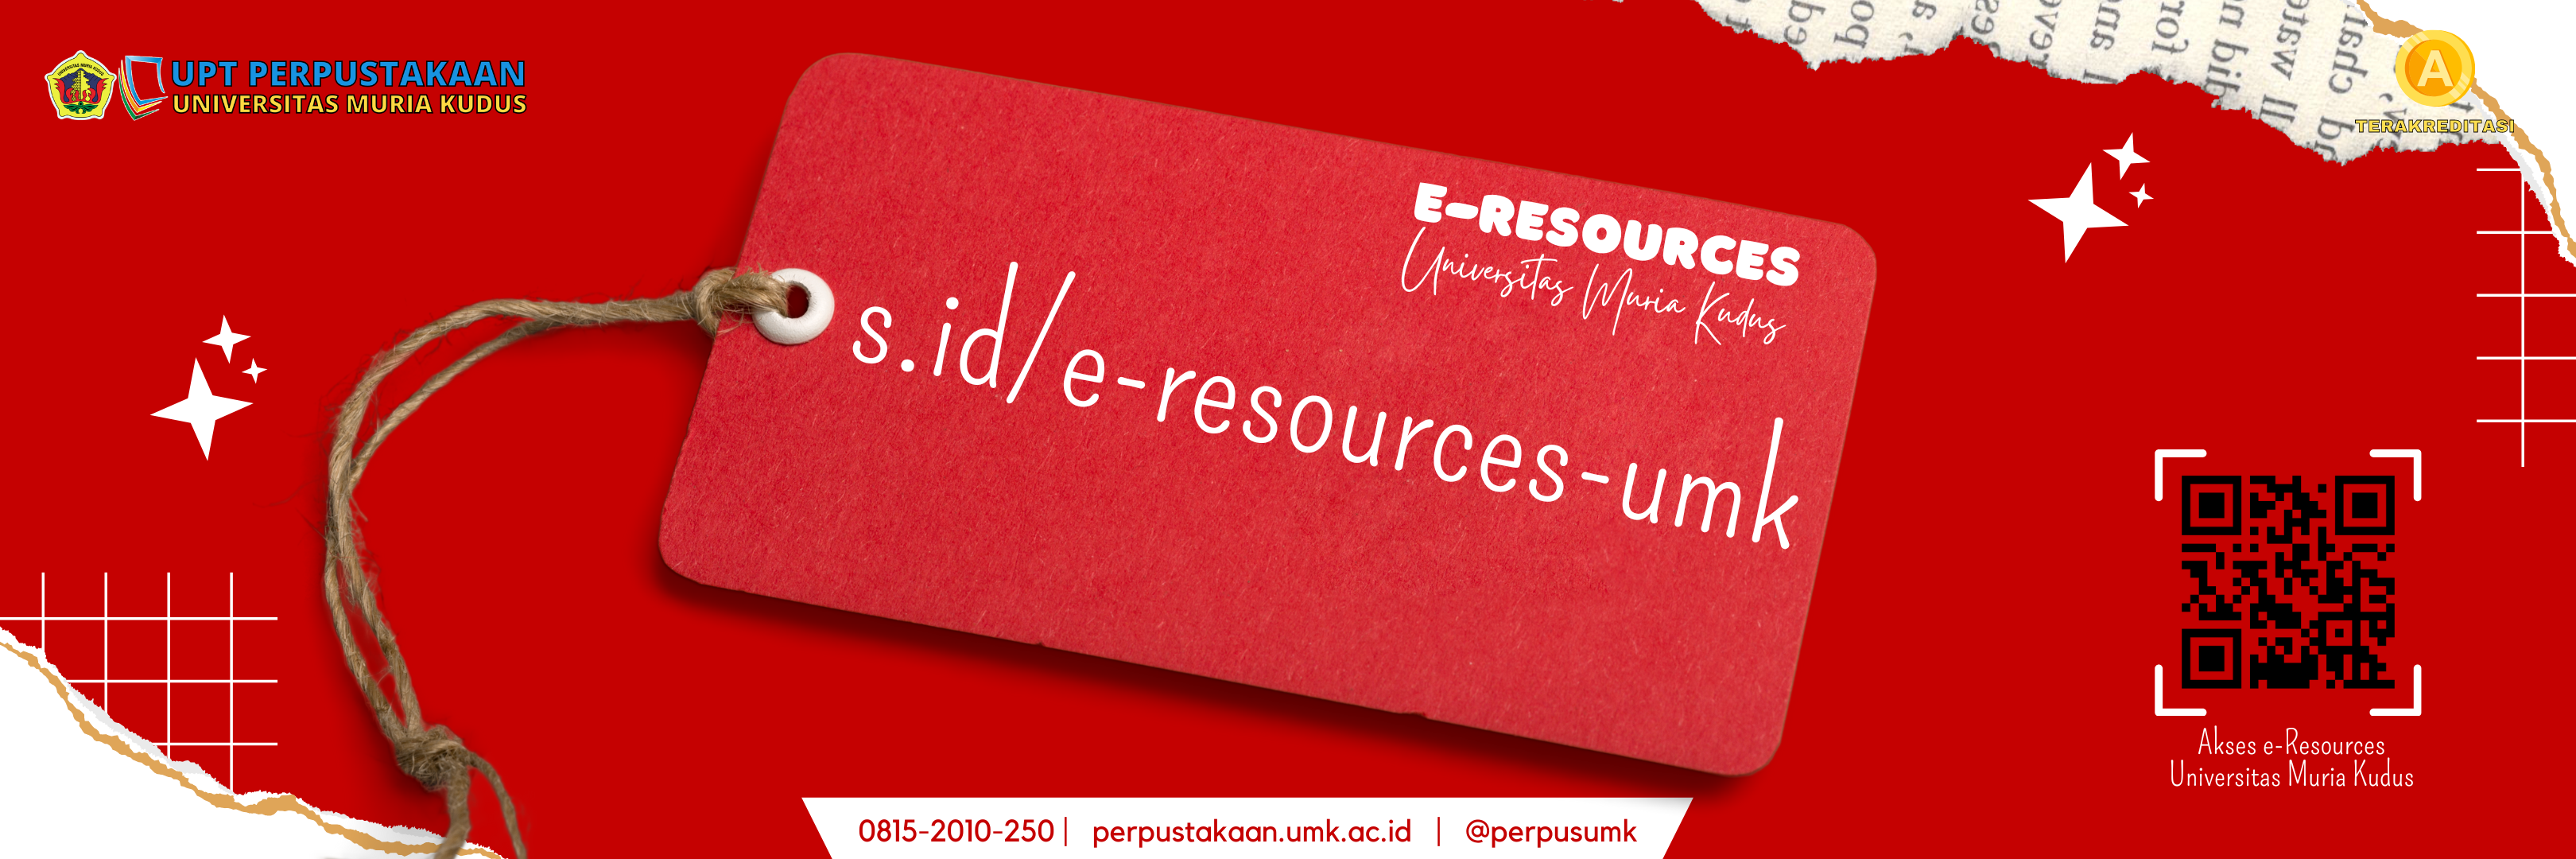 e-Resources